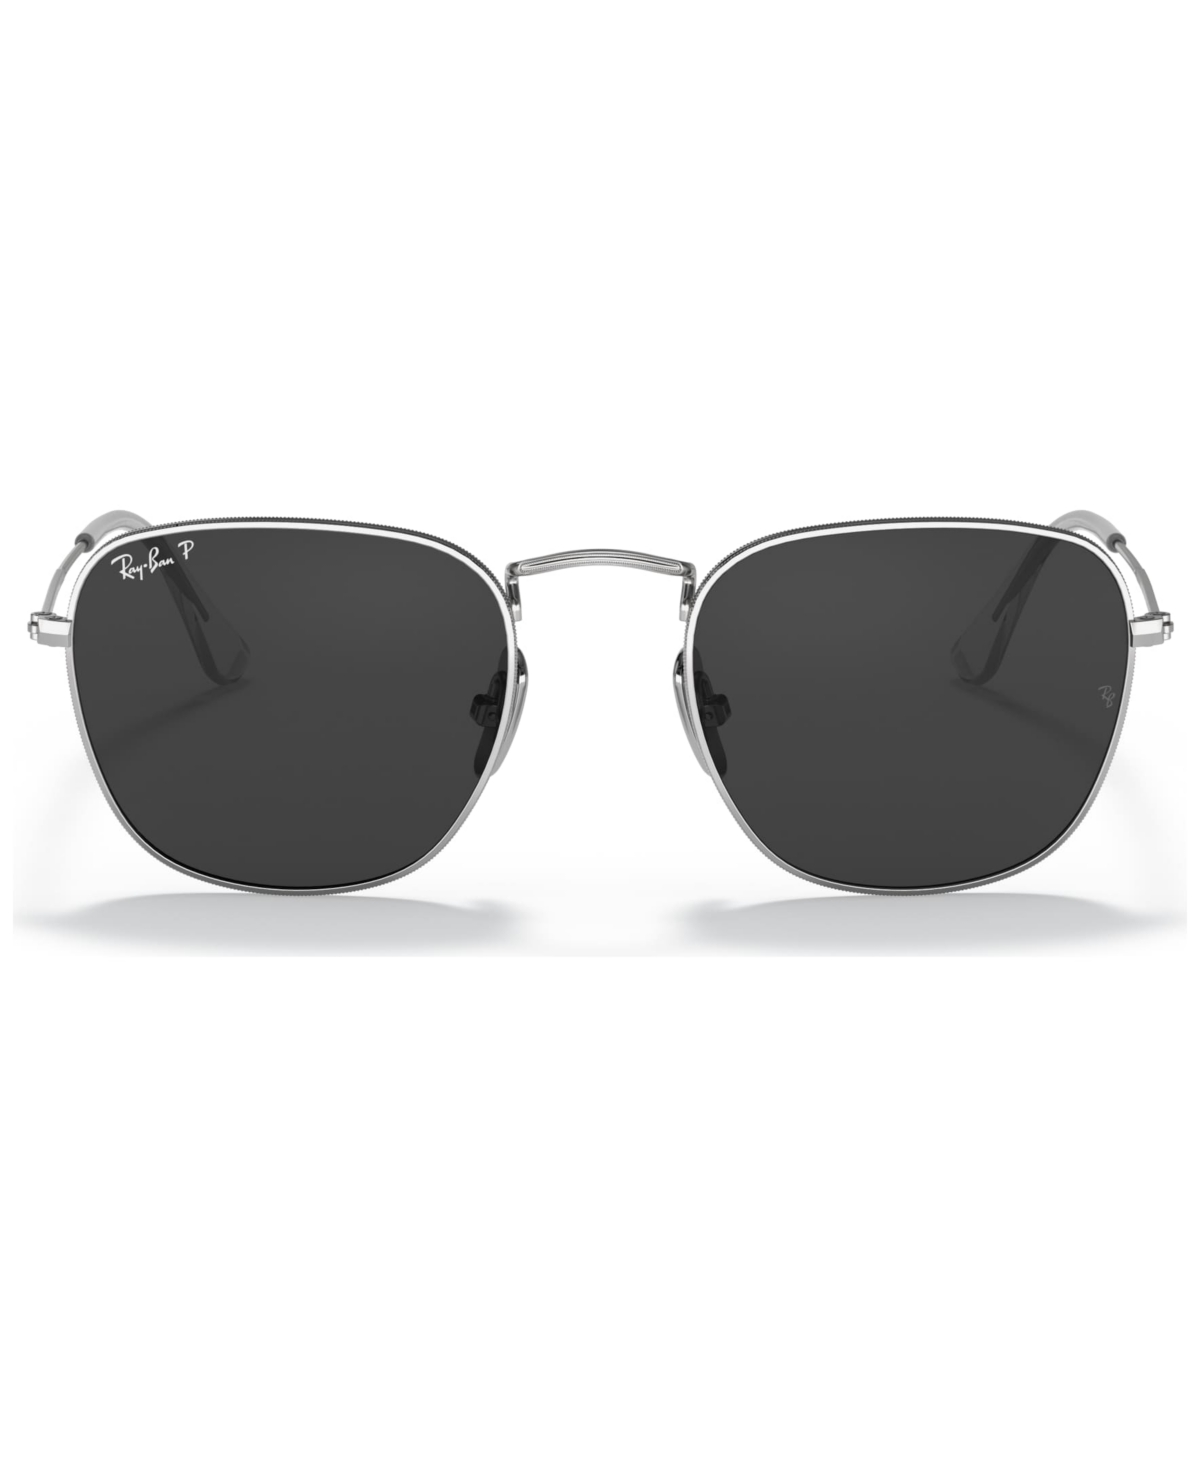 Ray Ban Frank Titanium Sunglasses Silver Frame Black Lenses Polarized 51-20